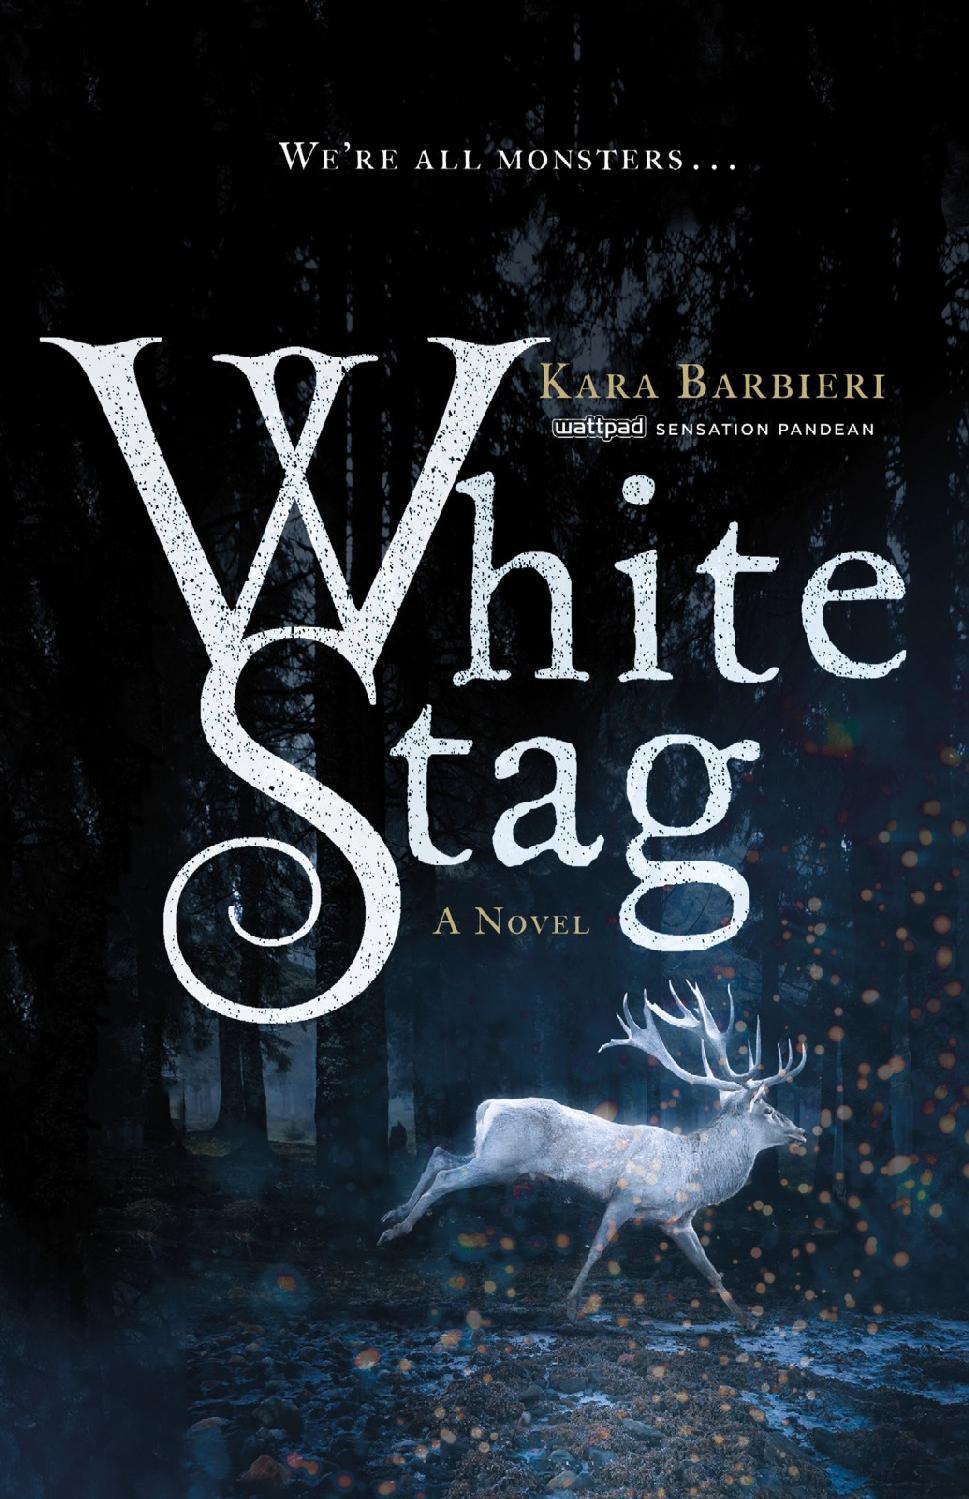 White Stag: A Permafrost Novel